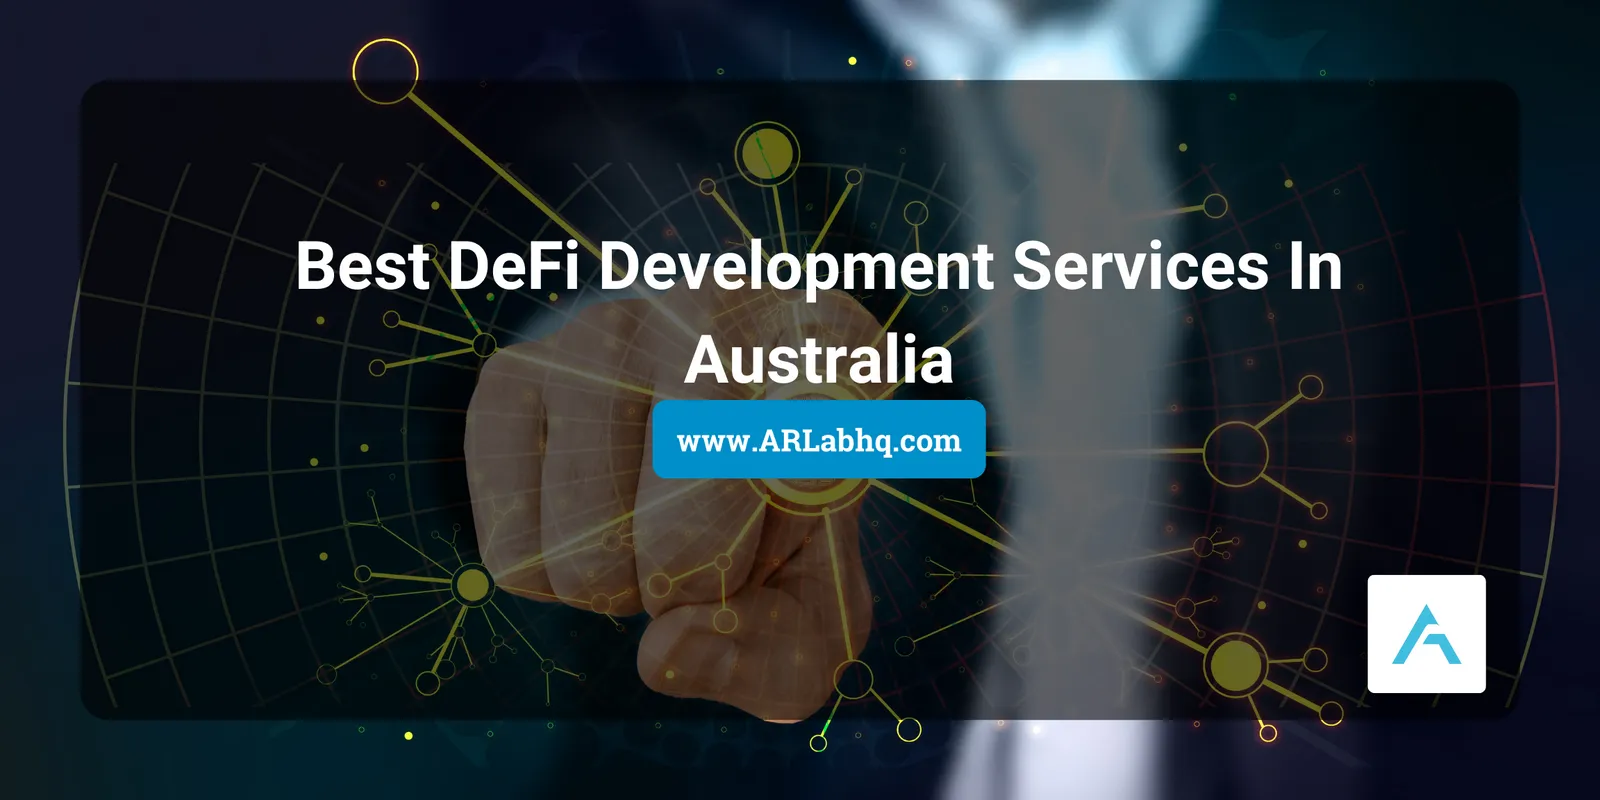 ARLab Is Providing Best DeFi Development Services In Australia